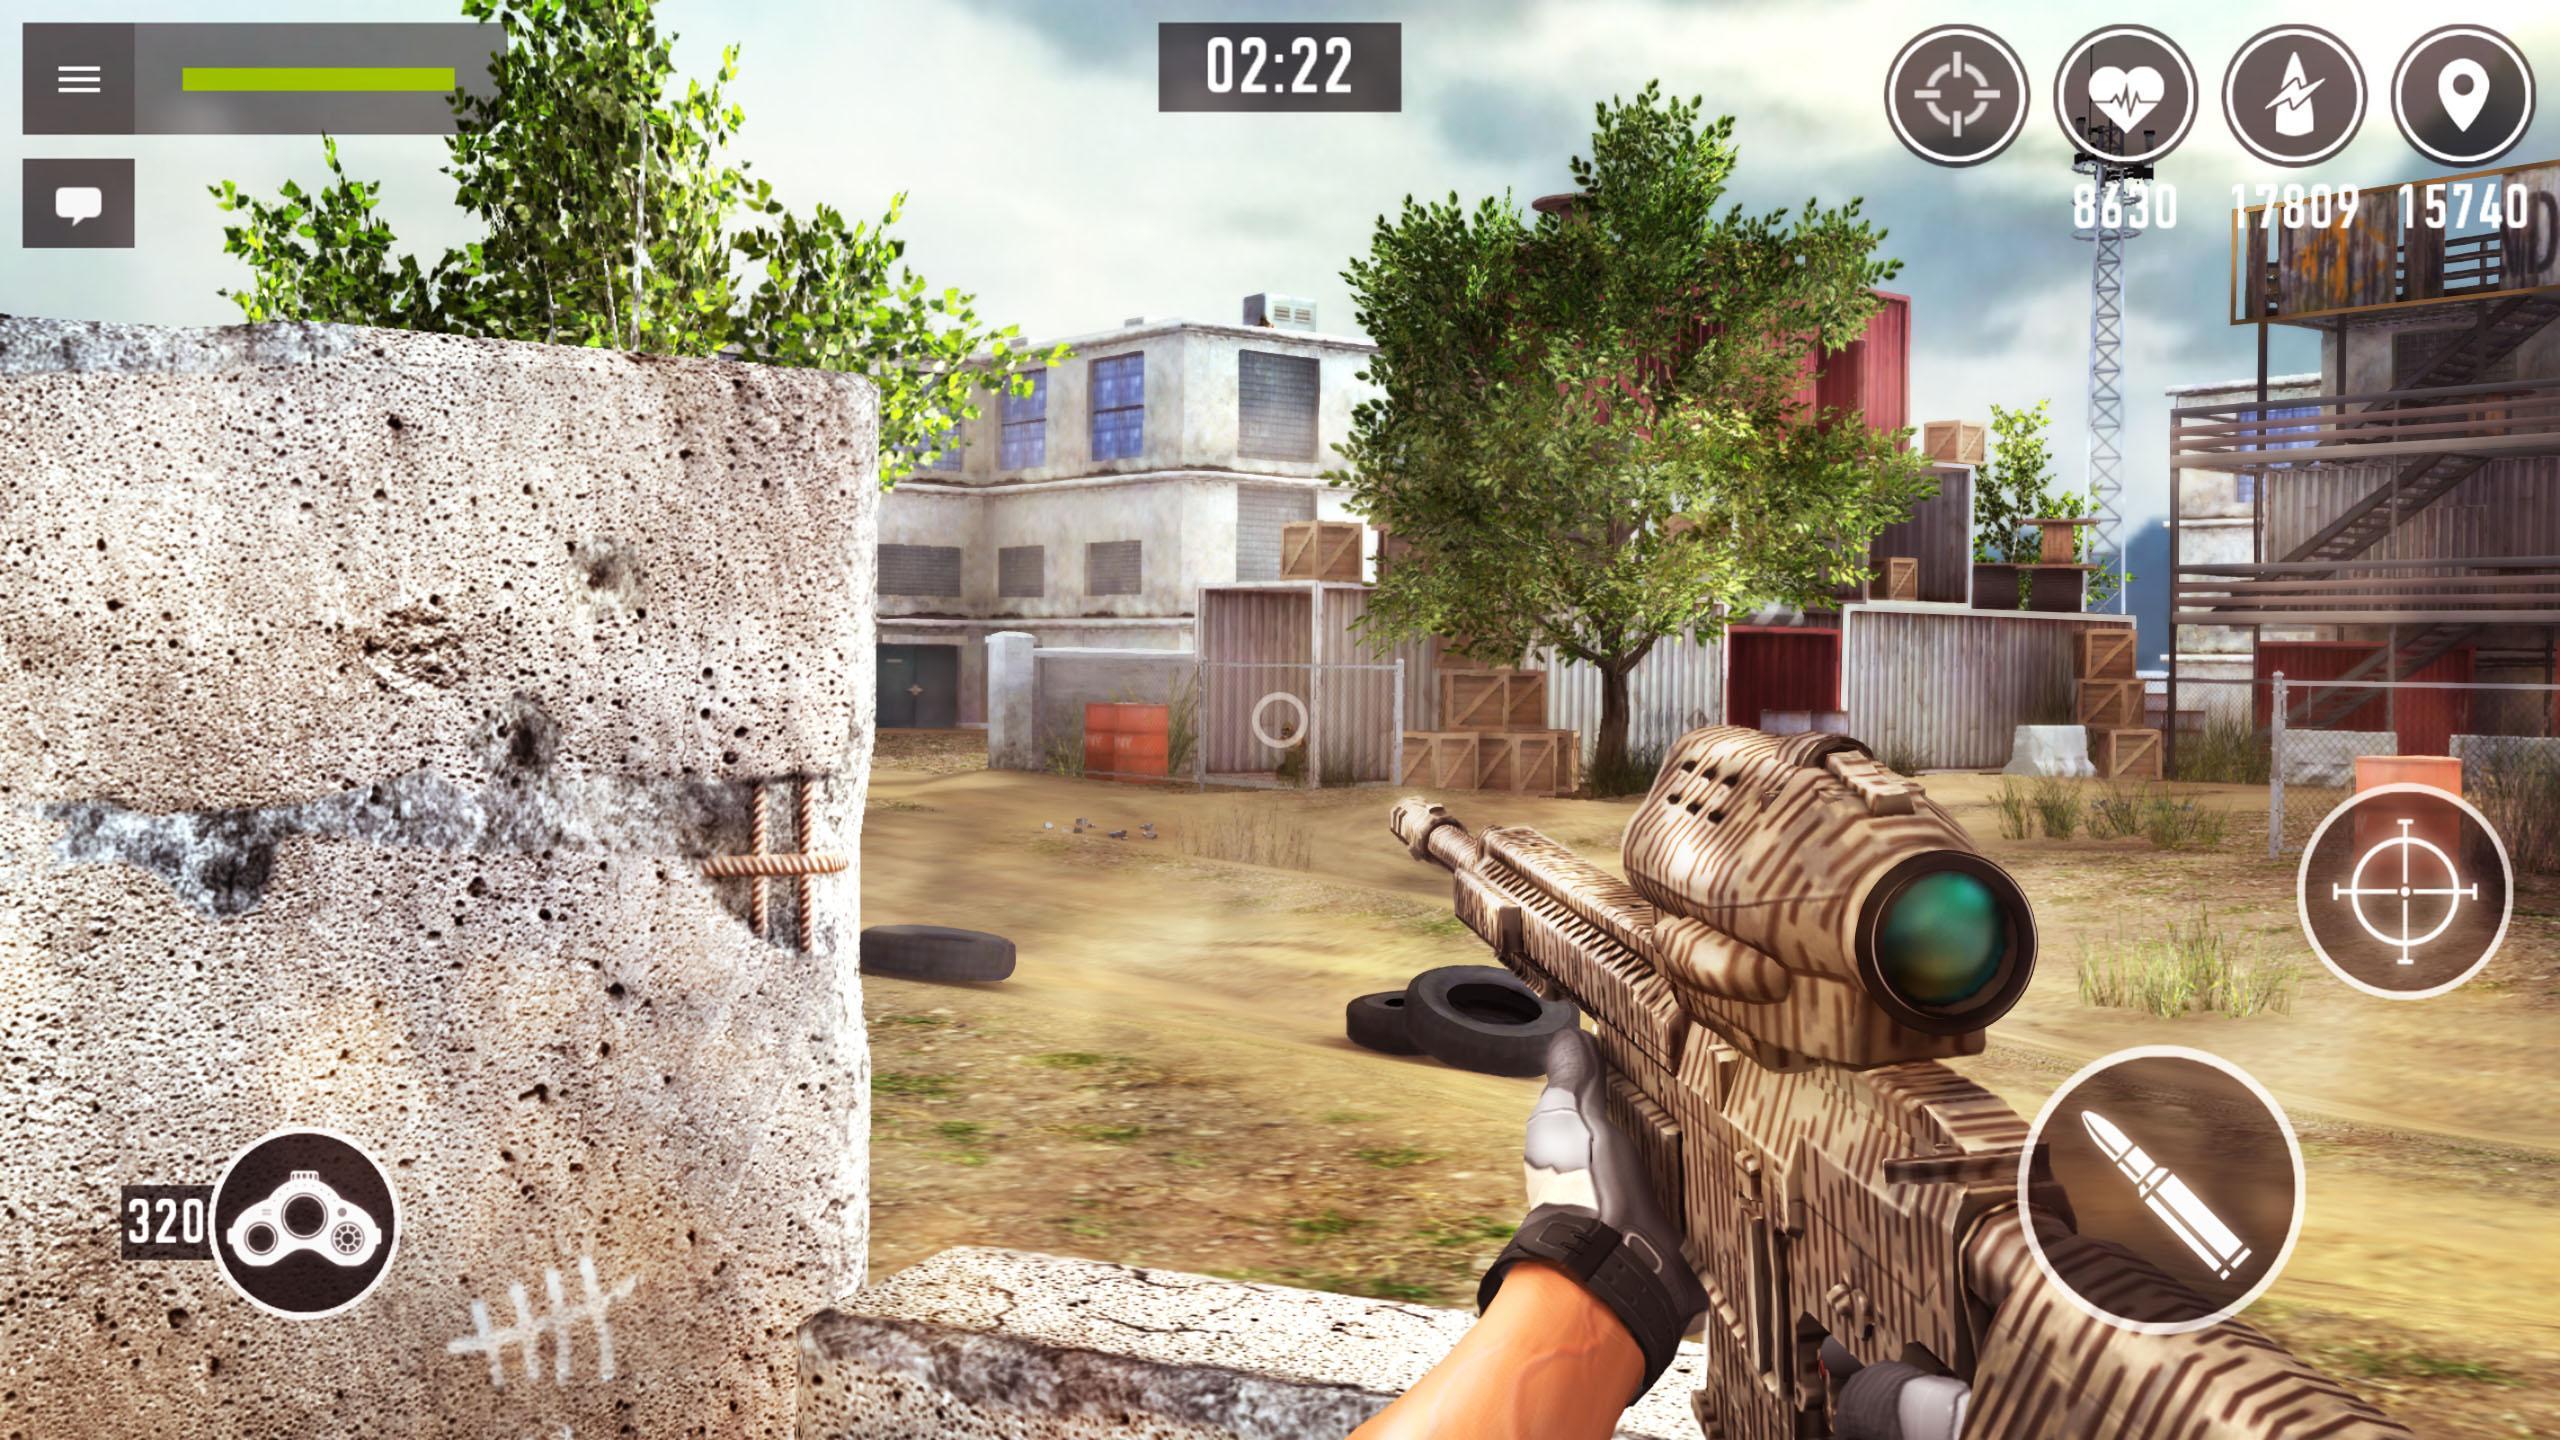 Sniper Arena PvP Army Shooter 1.2.8 Screenshot 15